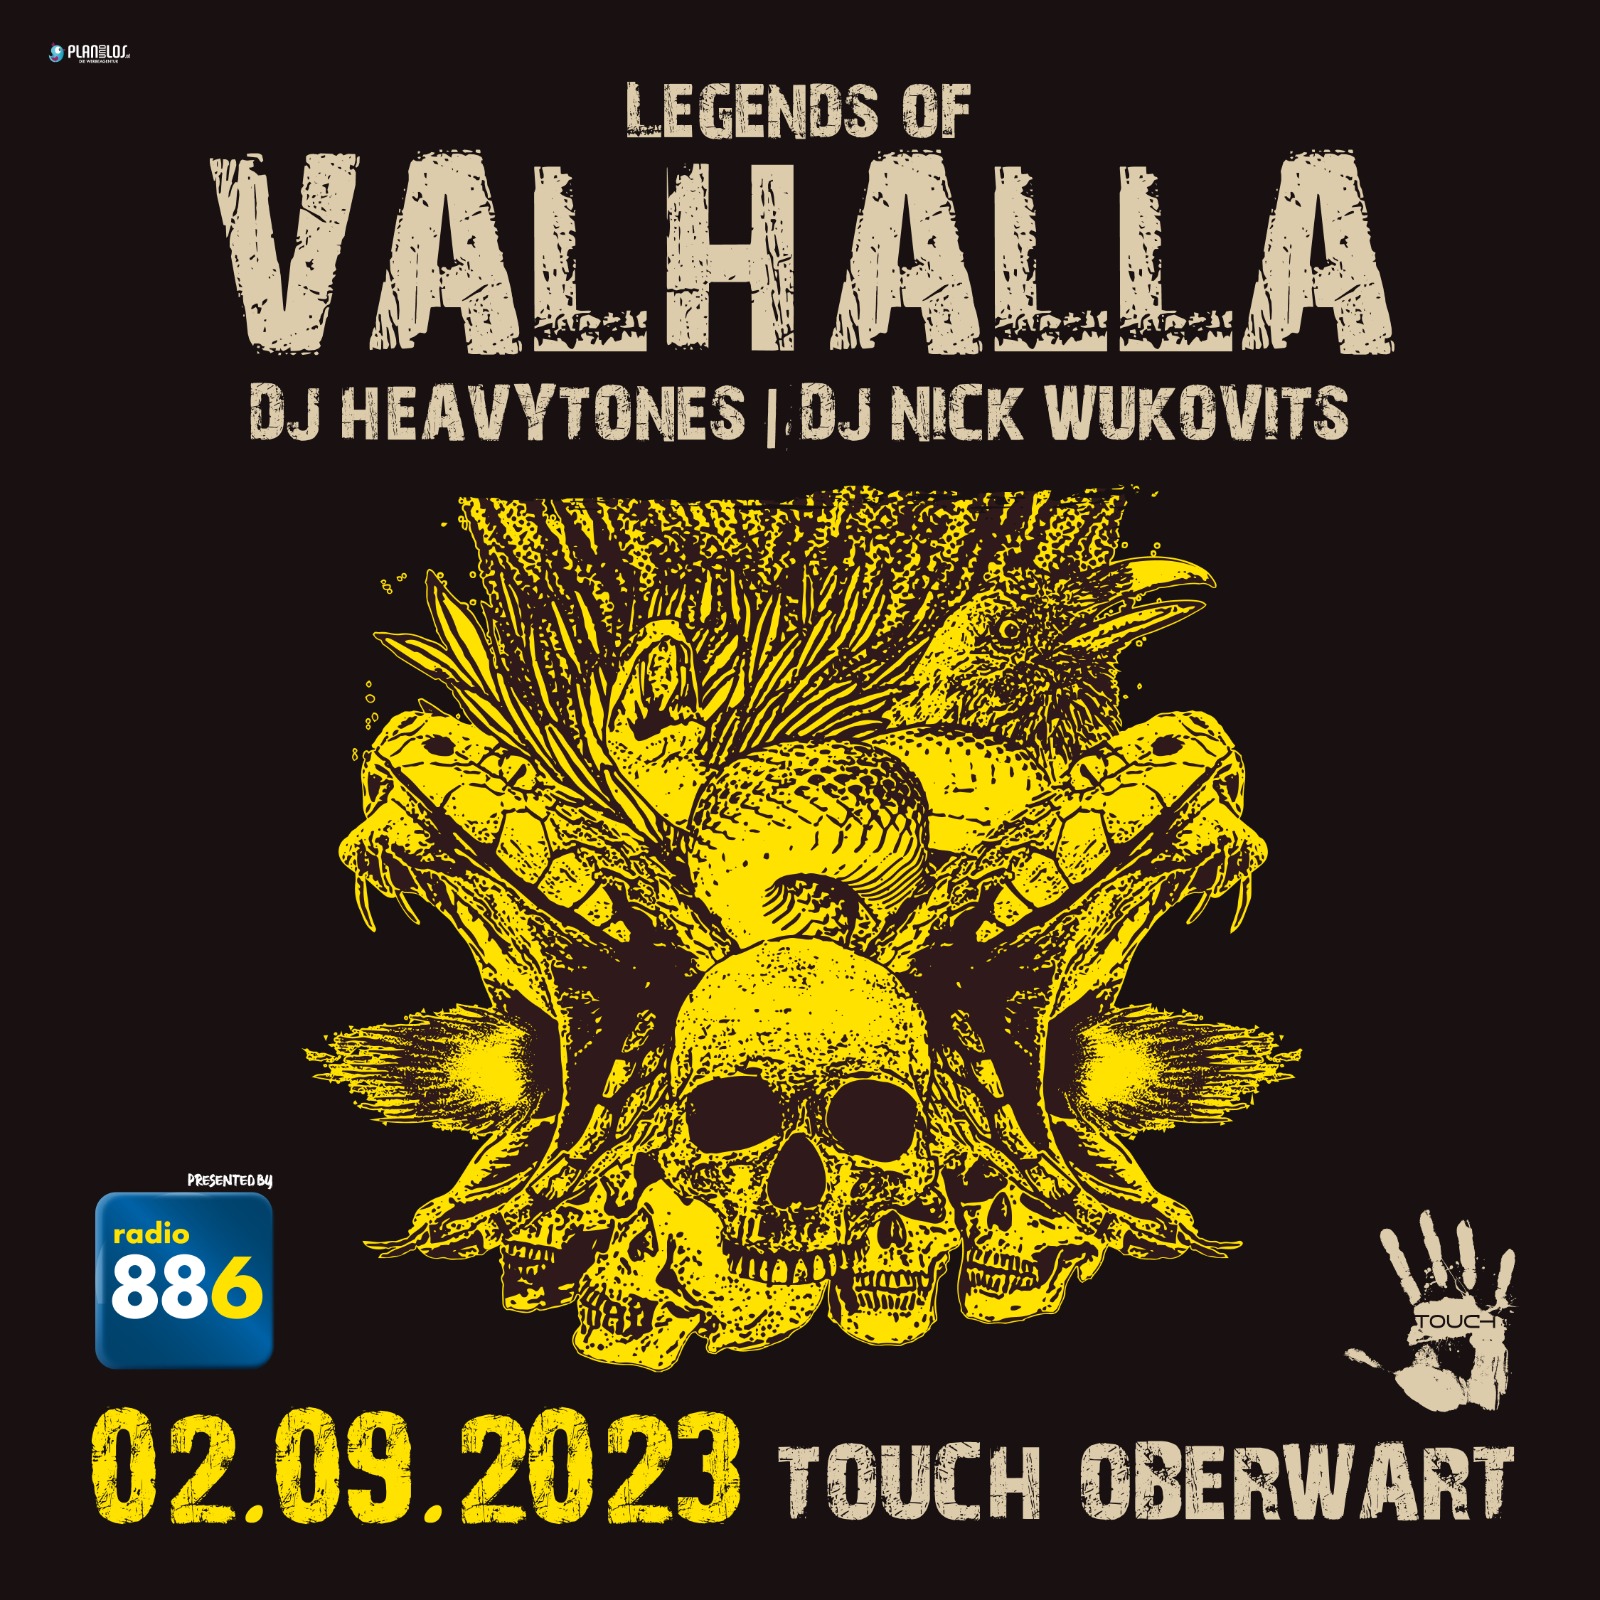 Legends of Valhalla presented by Radio 88.6 am 2. September 2023 @ Touch Garden.